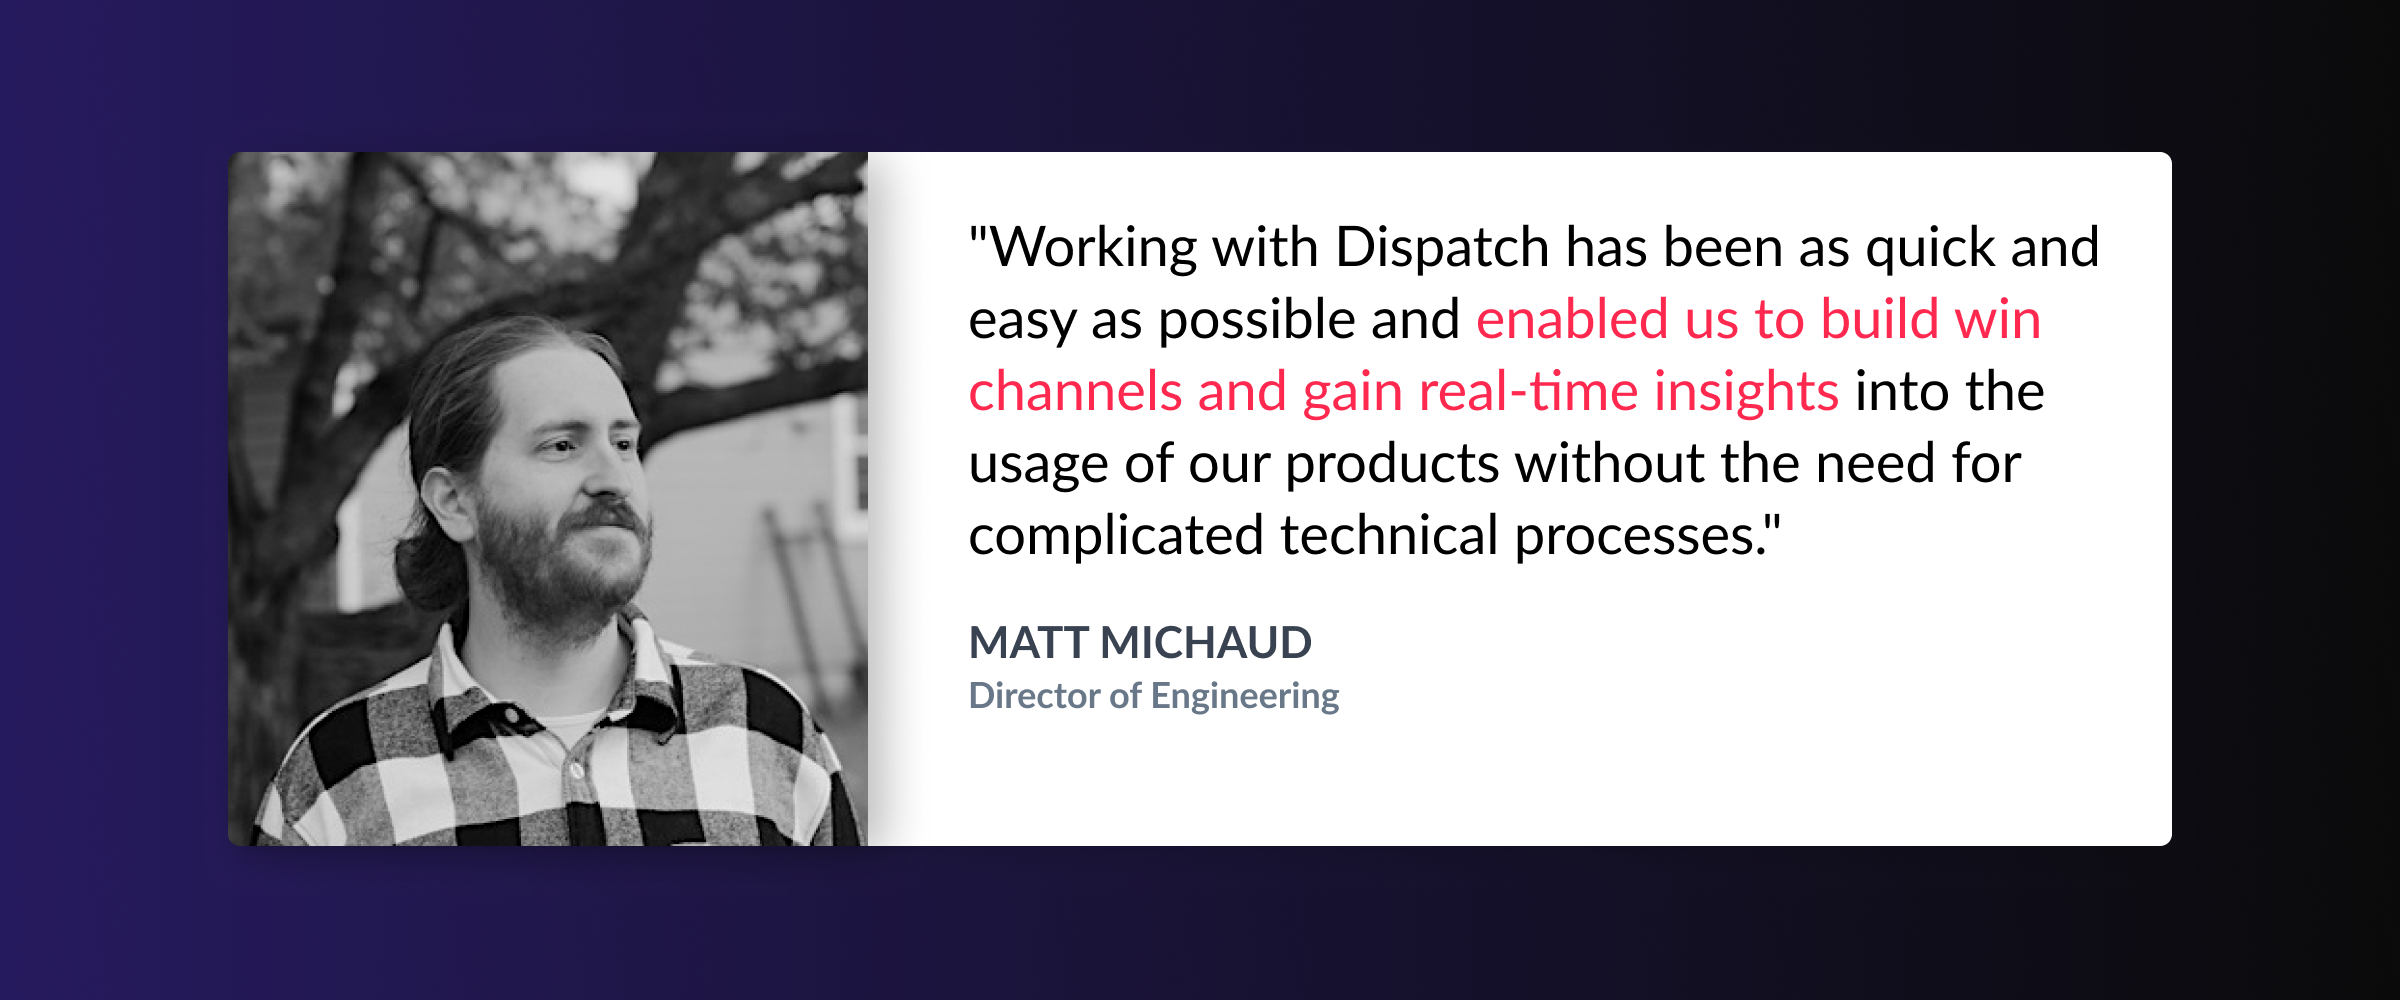 Matt Michaud quote about Dispatch